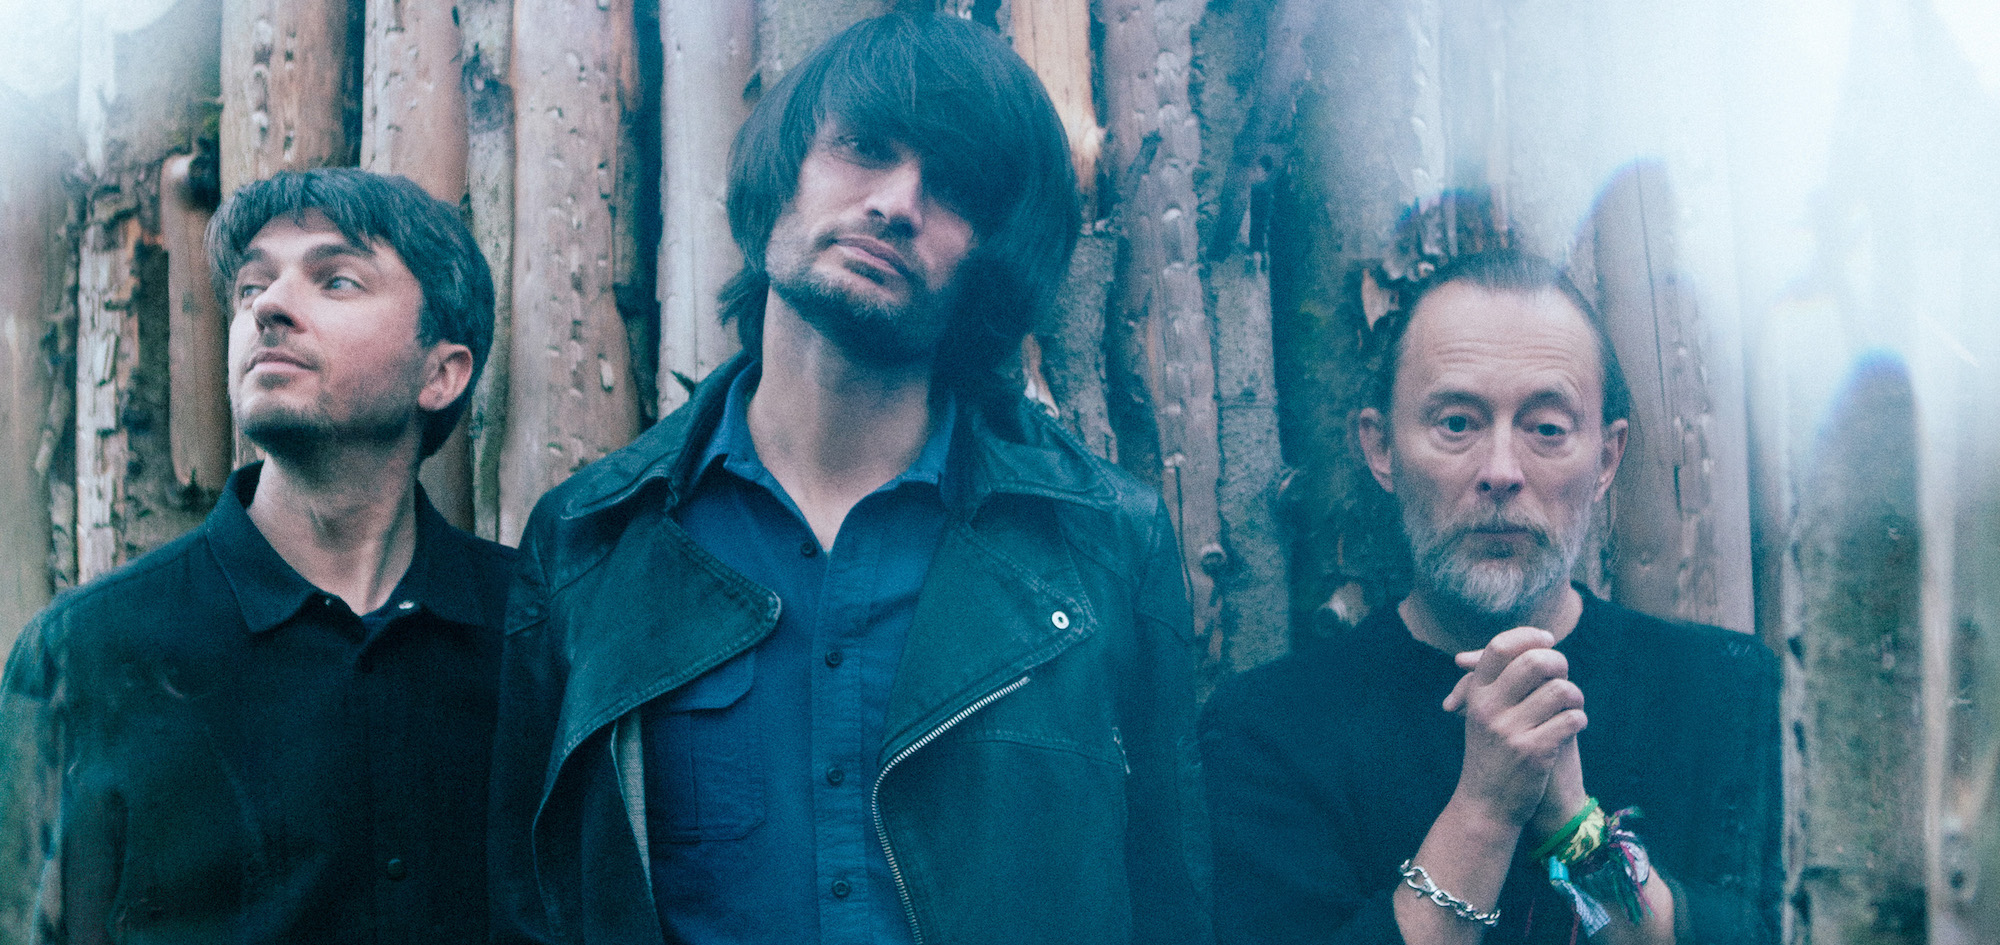 Radiohead’s Thom Yorke, Johnny Greenwood Debut New Band The Smile During Glastonbury